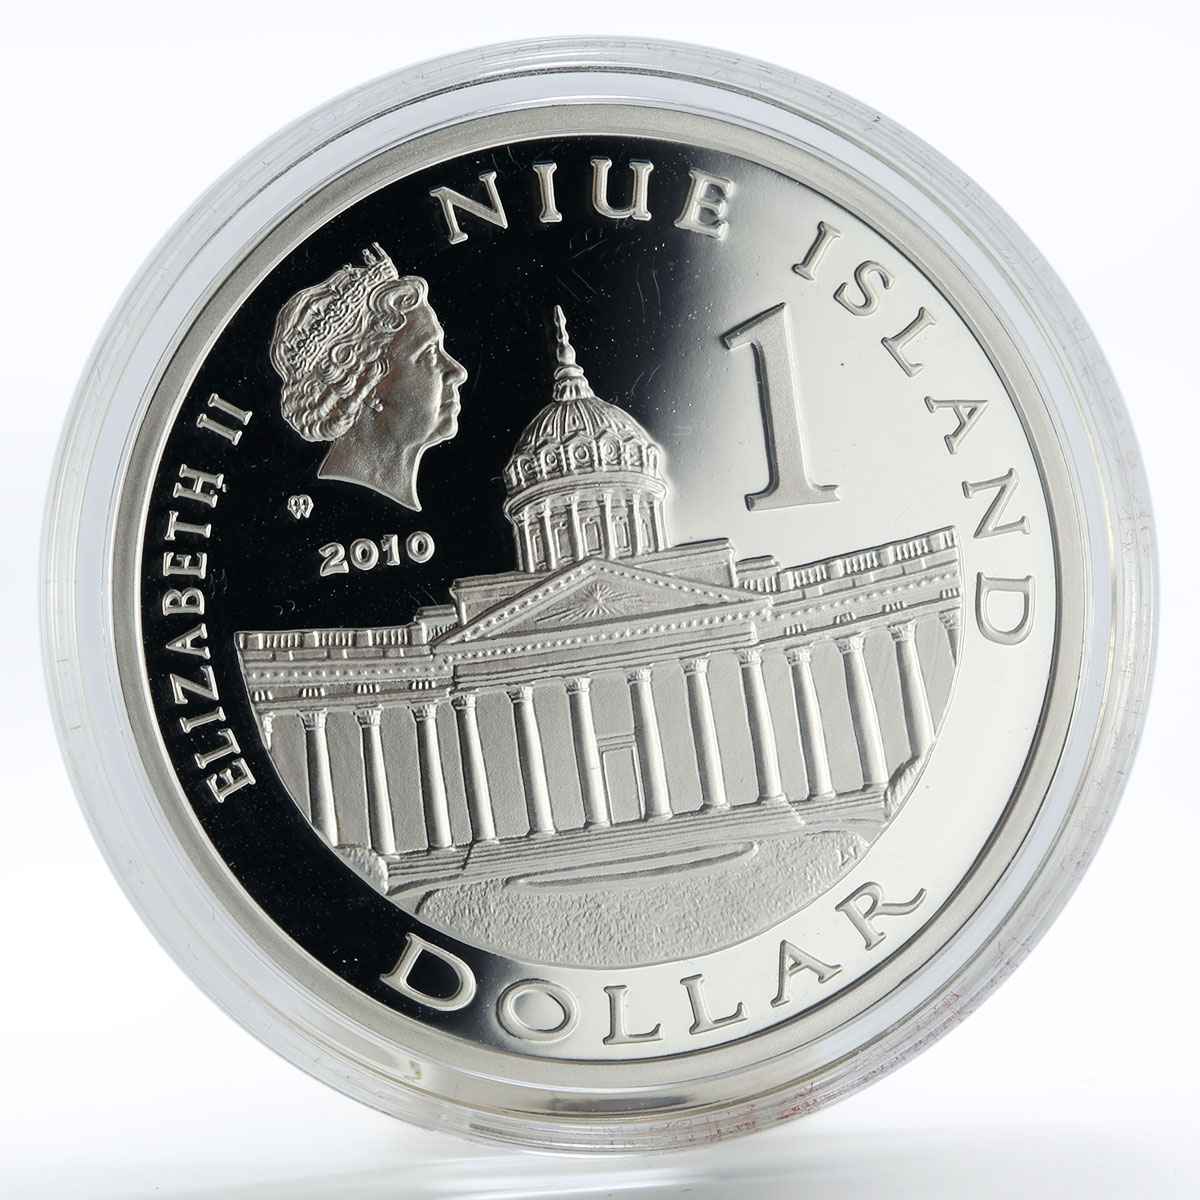 Niue set 2 coins M. Kutuzov and N. Bonararte colored proof silver 2010